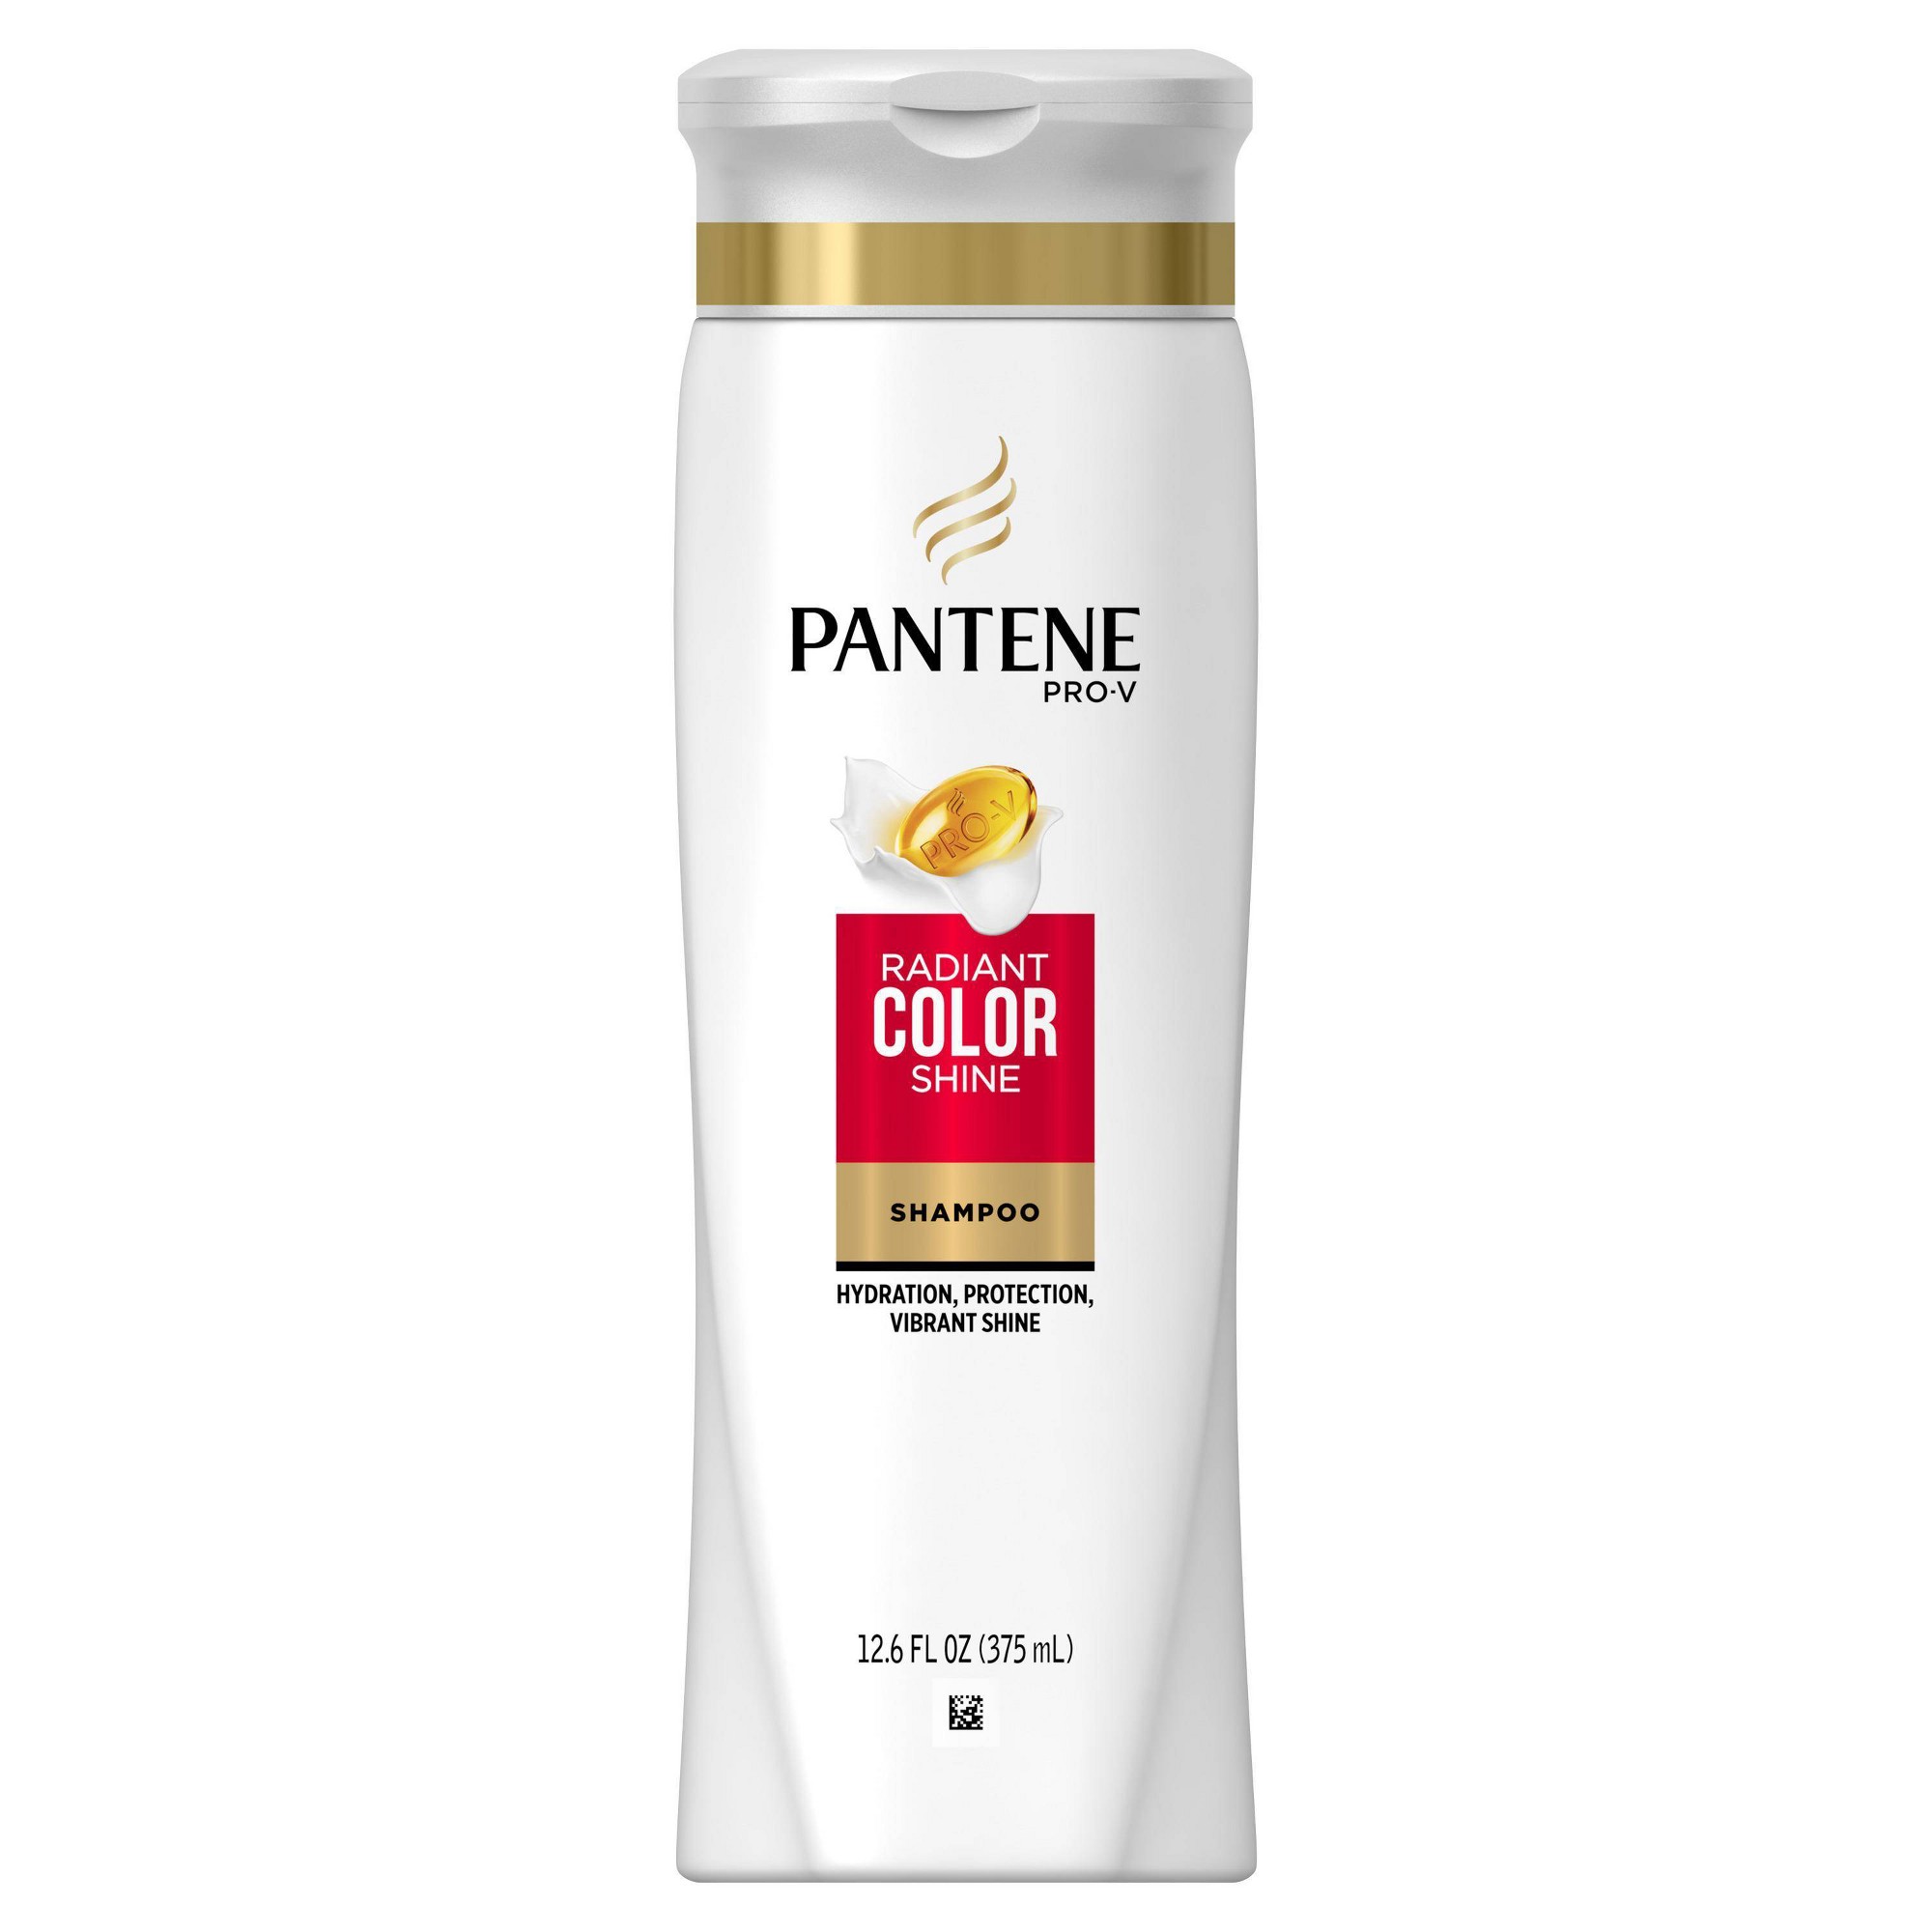 Pantene Pro-V Radiant Color Shine Shampoo - 12.6 fl oz